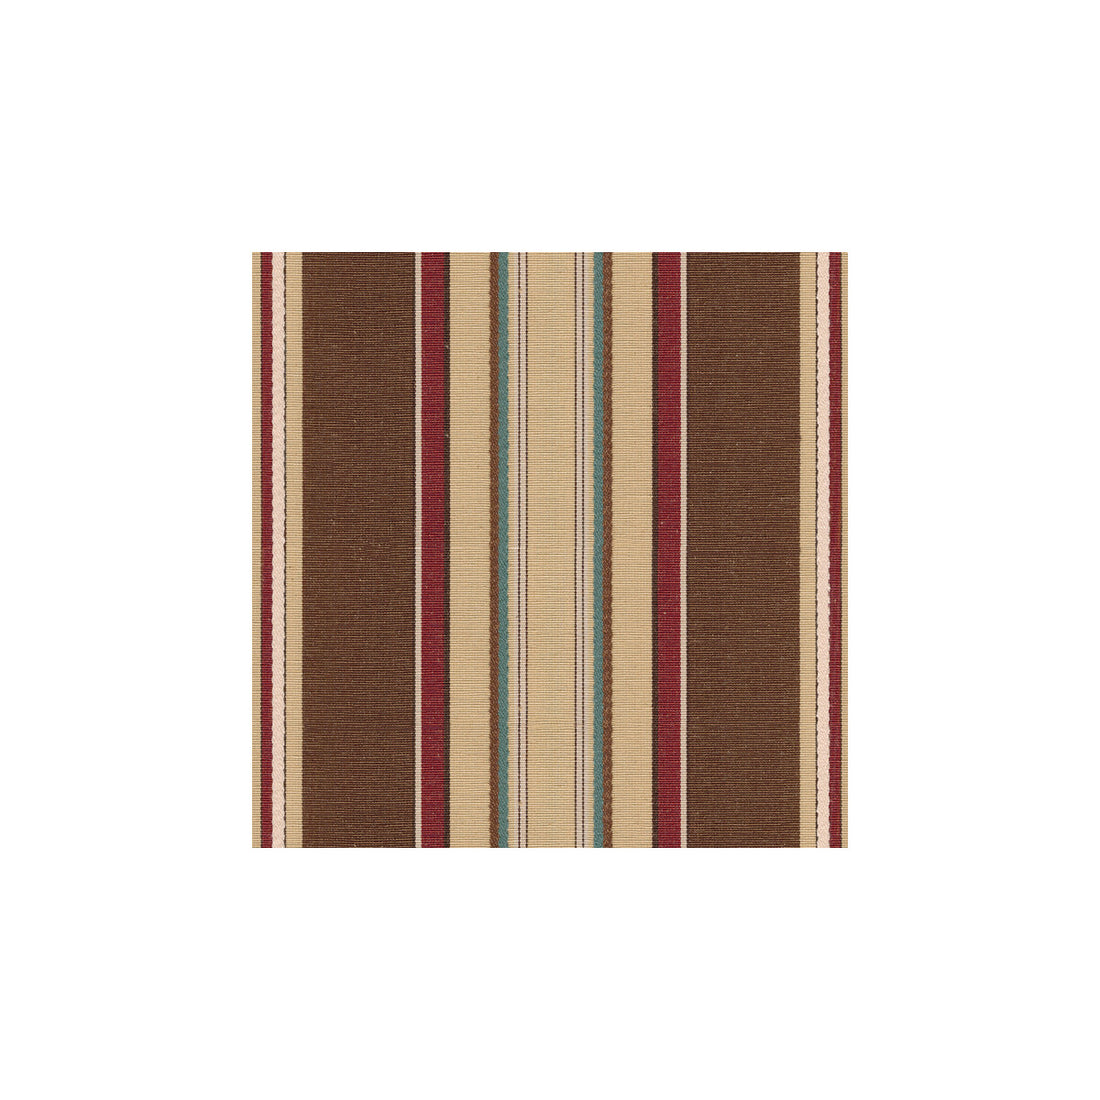 Bologna fabric in saddle color - pattern 32498.619.0 - by Kravet Basics